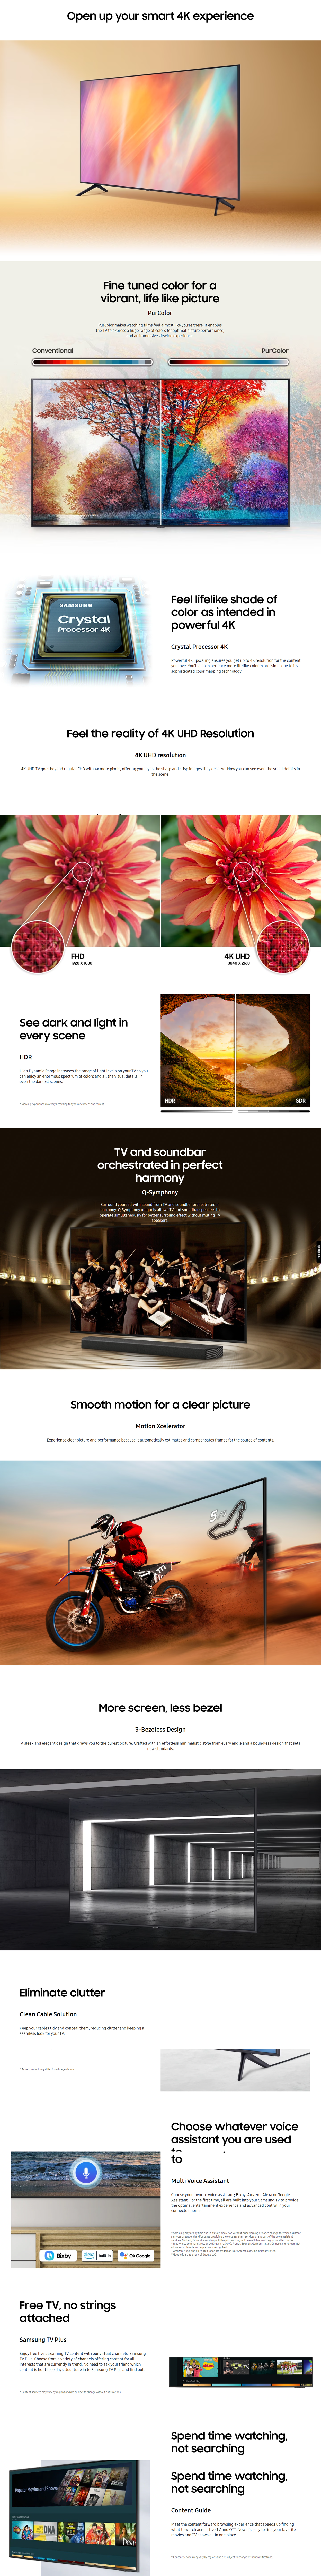 SAMSUNG Series 7 108 cm (43 inch) 4K Ultra HD LED Tizen TV with Alexa Compatibility (UA43AU7600)